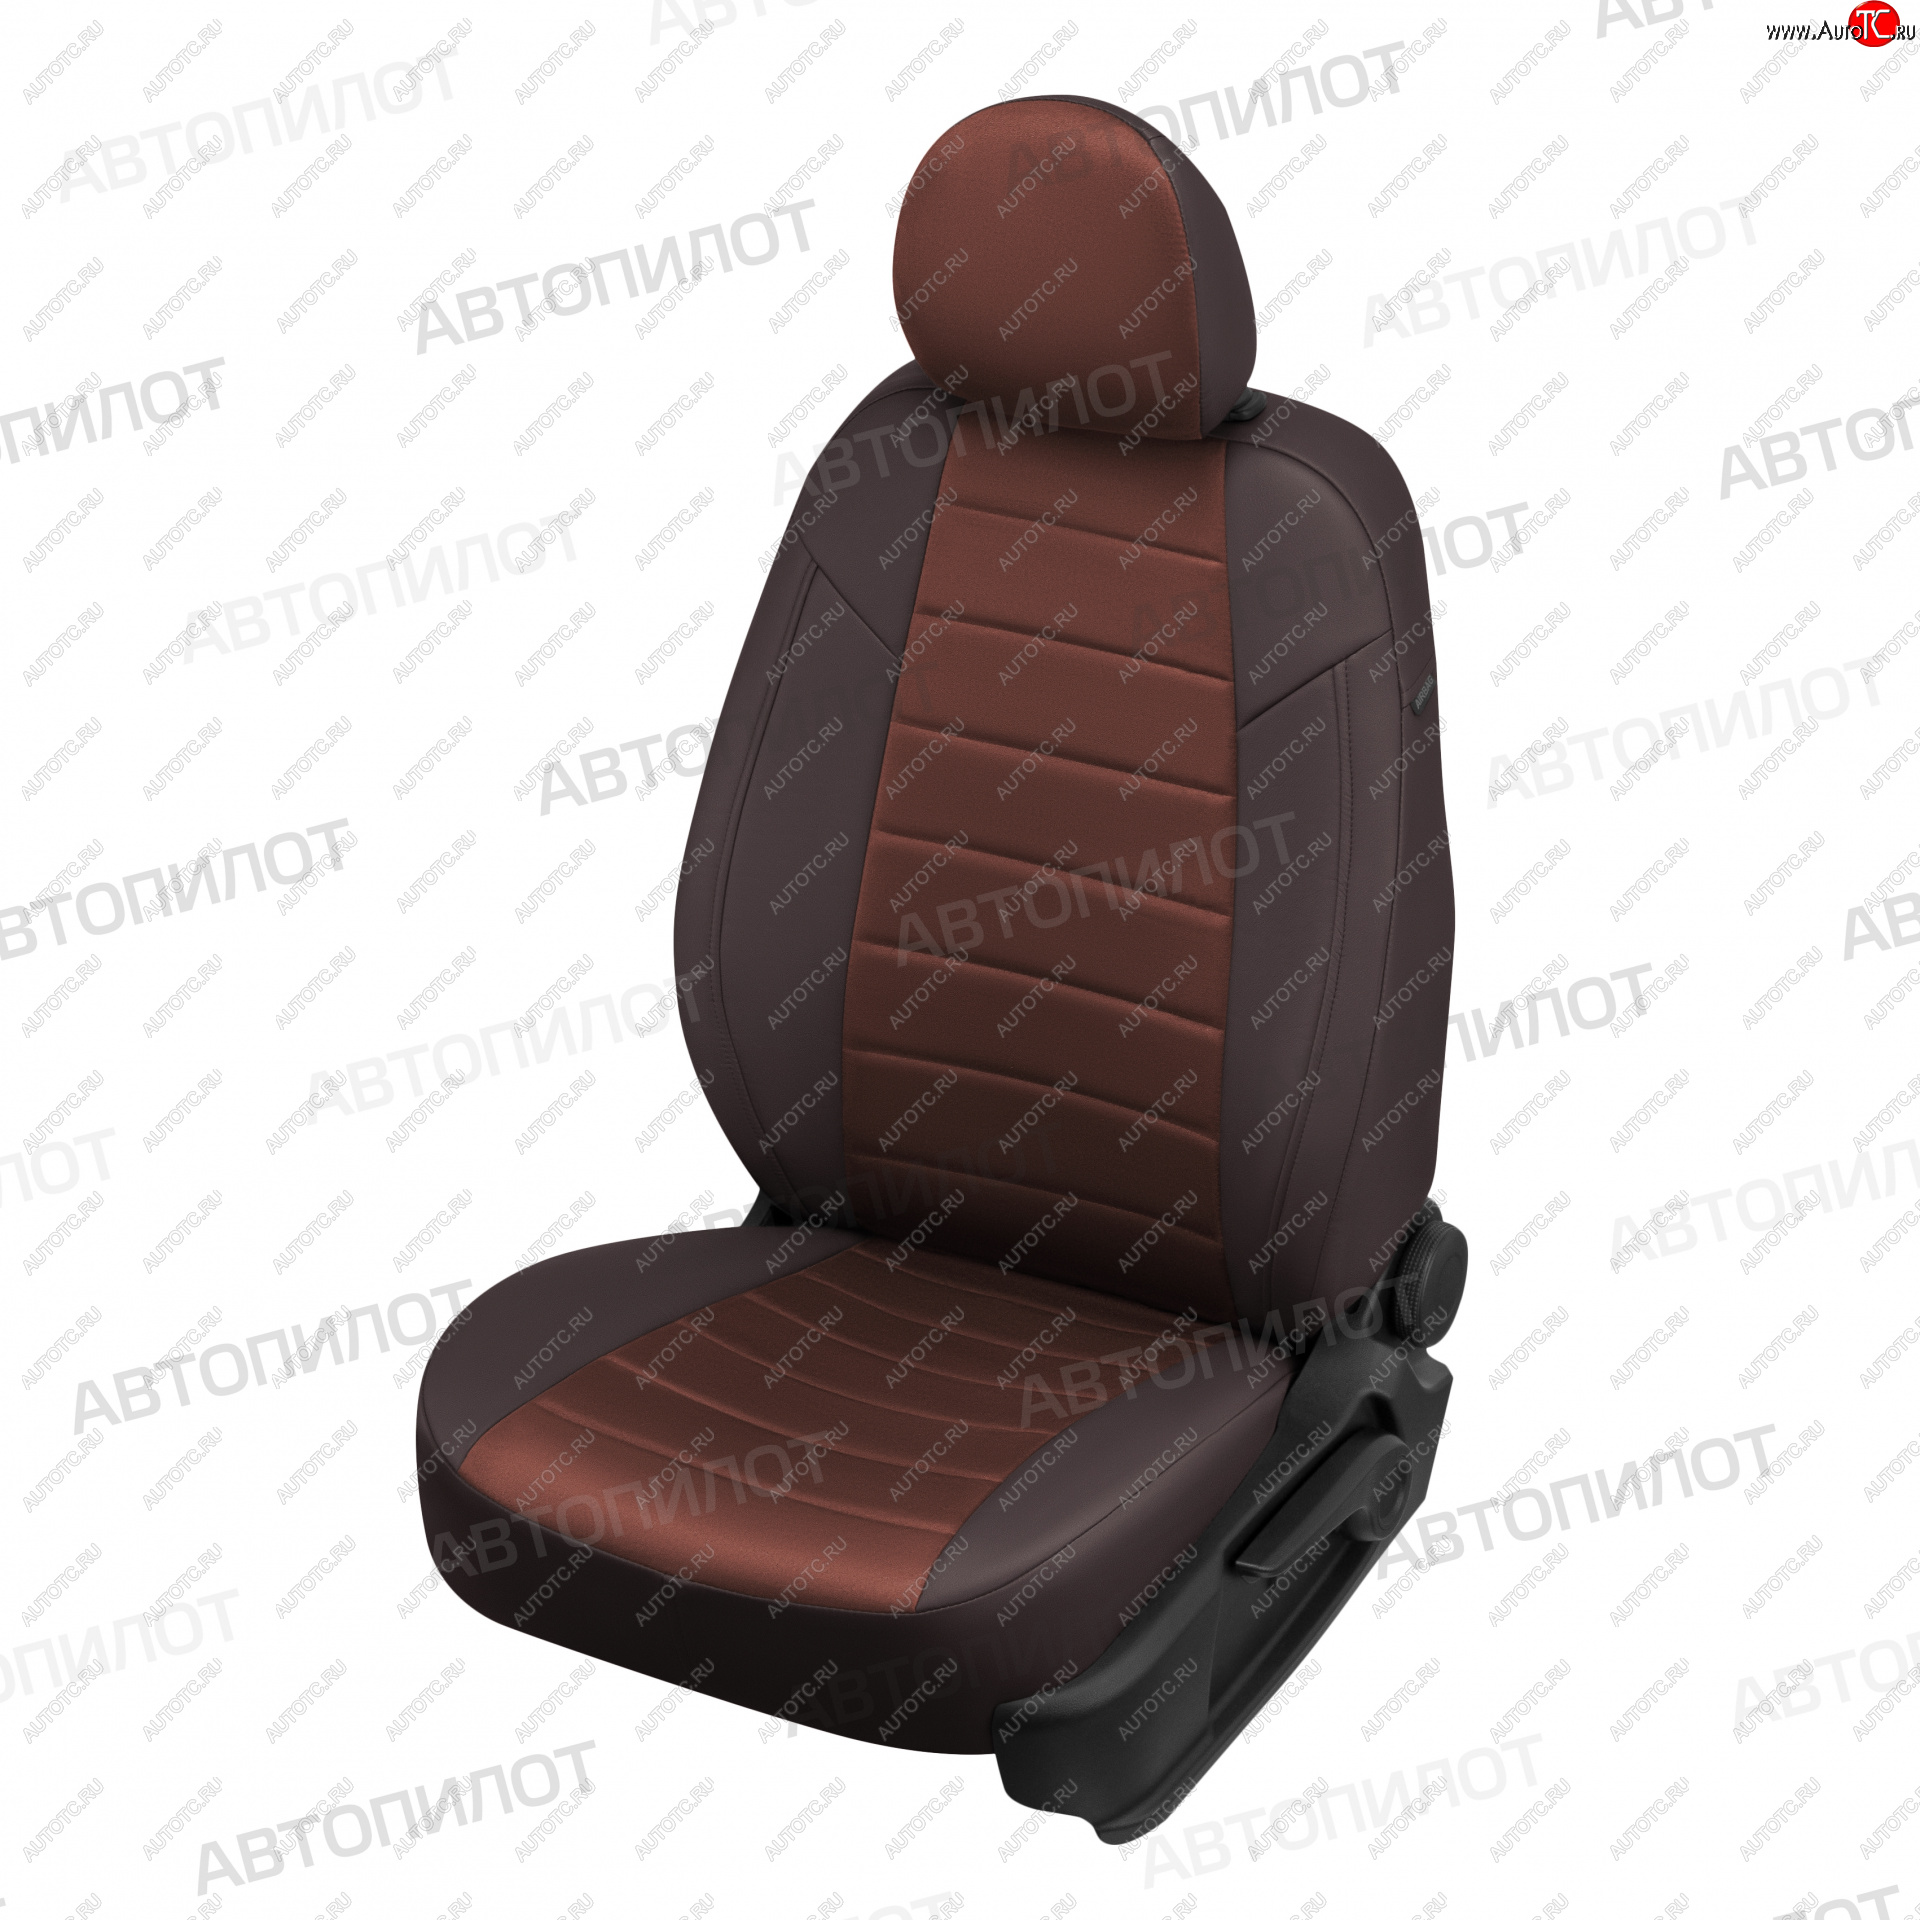 8 299 р. Чехлы сидений (экокожа/алькантара, 3 места) Автопилот  Hyundai HD-72 - HD78 (шоколад)